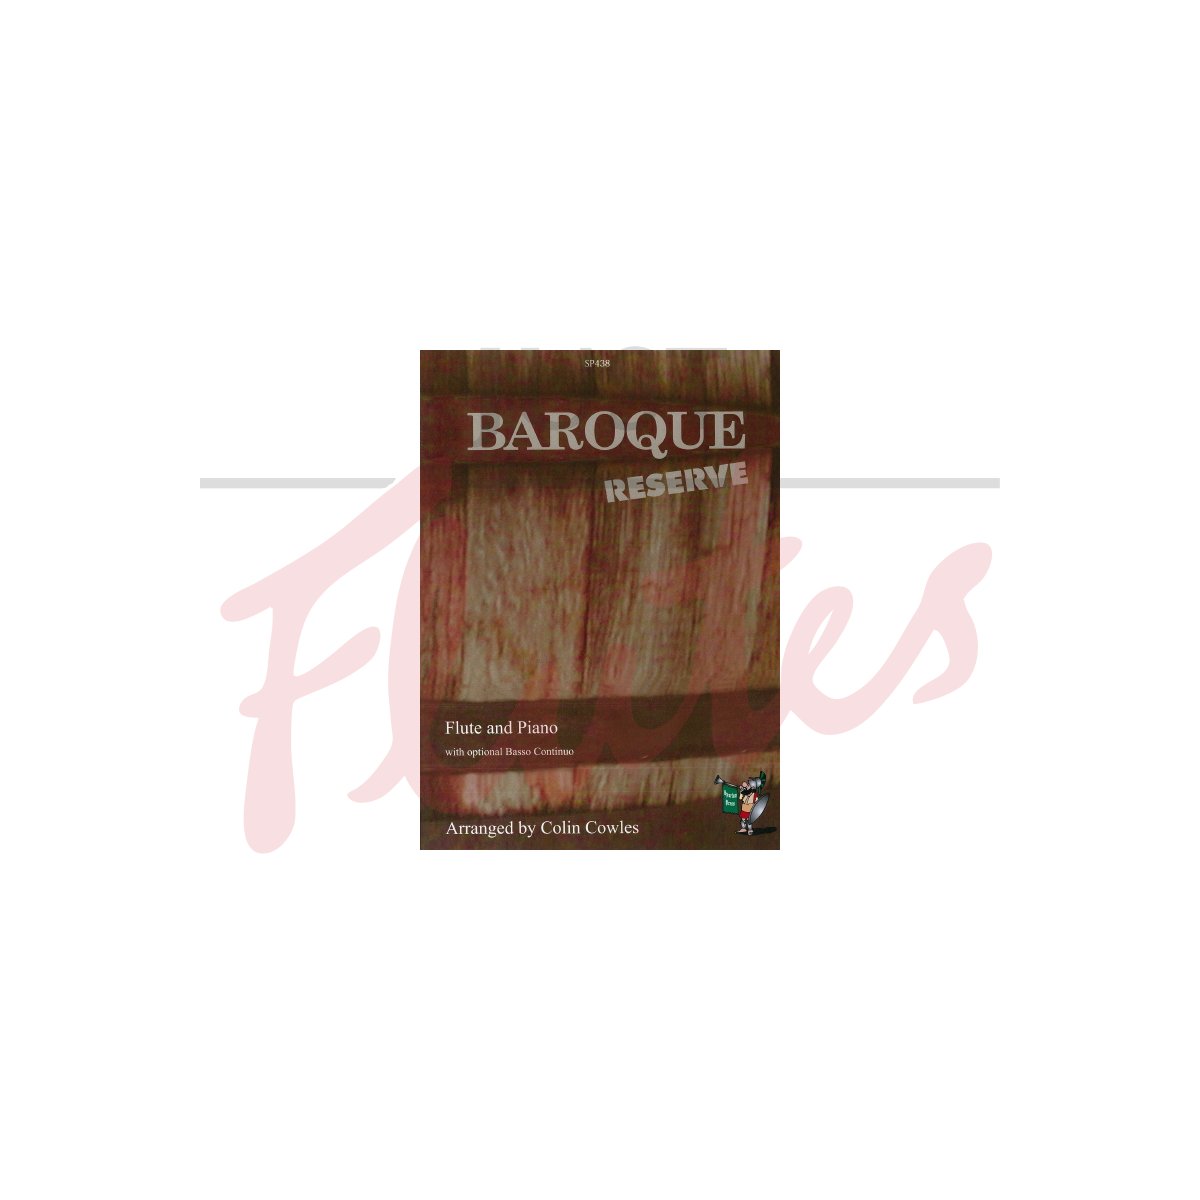 Baroque Reserve [Flute]